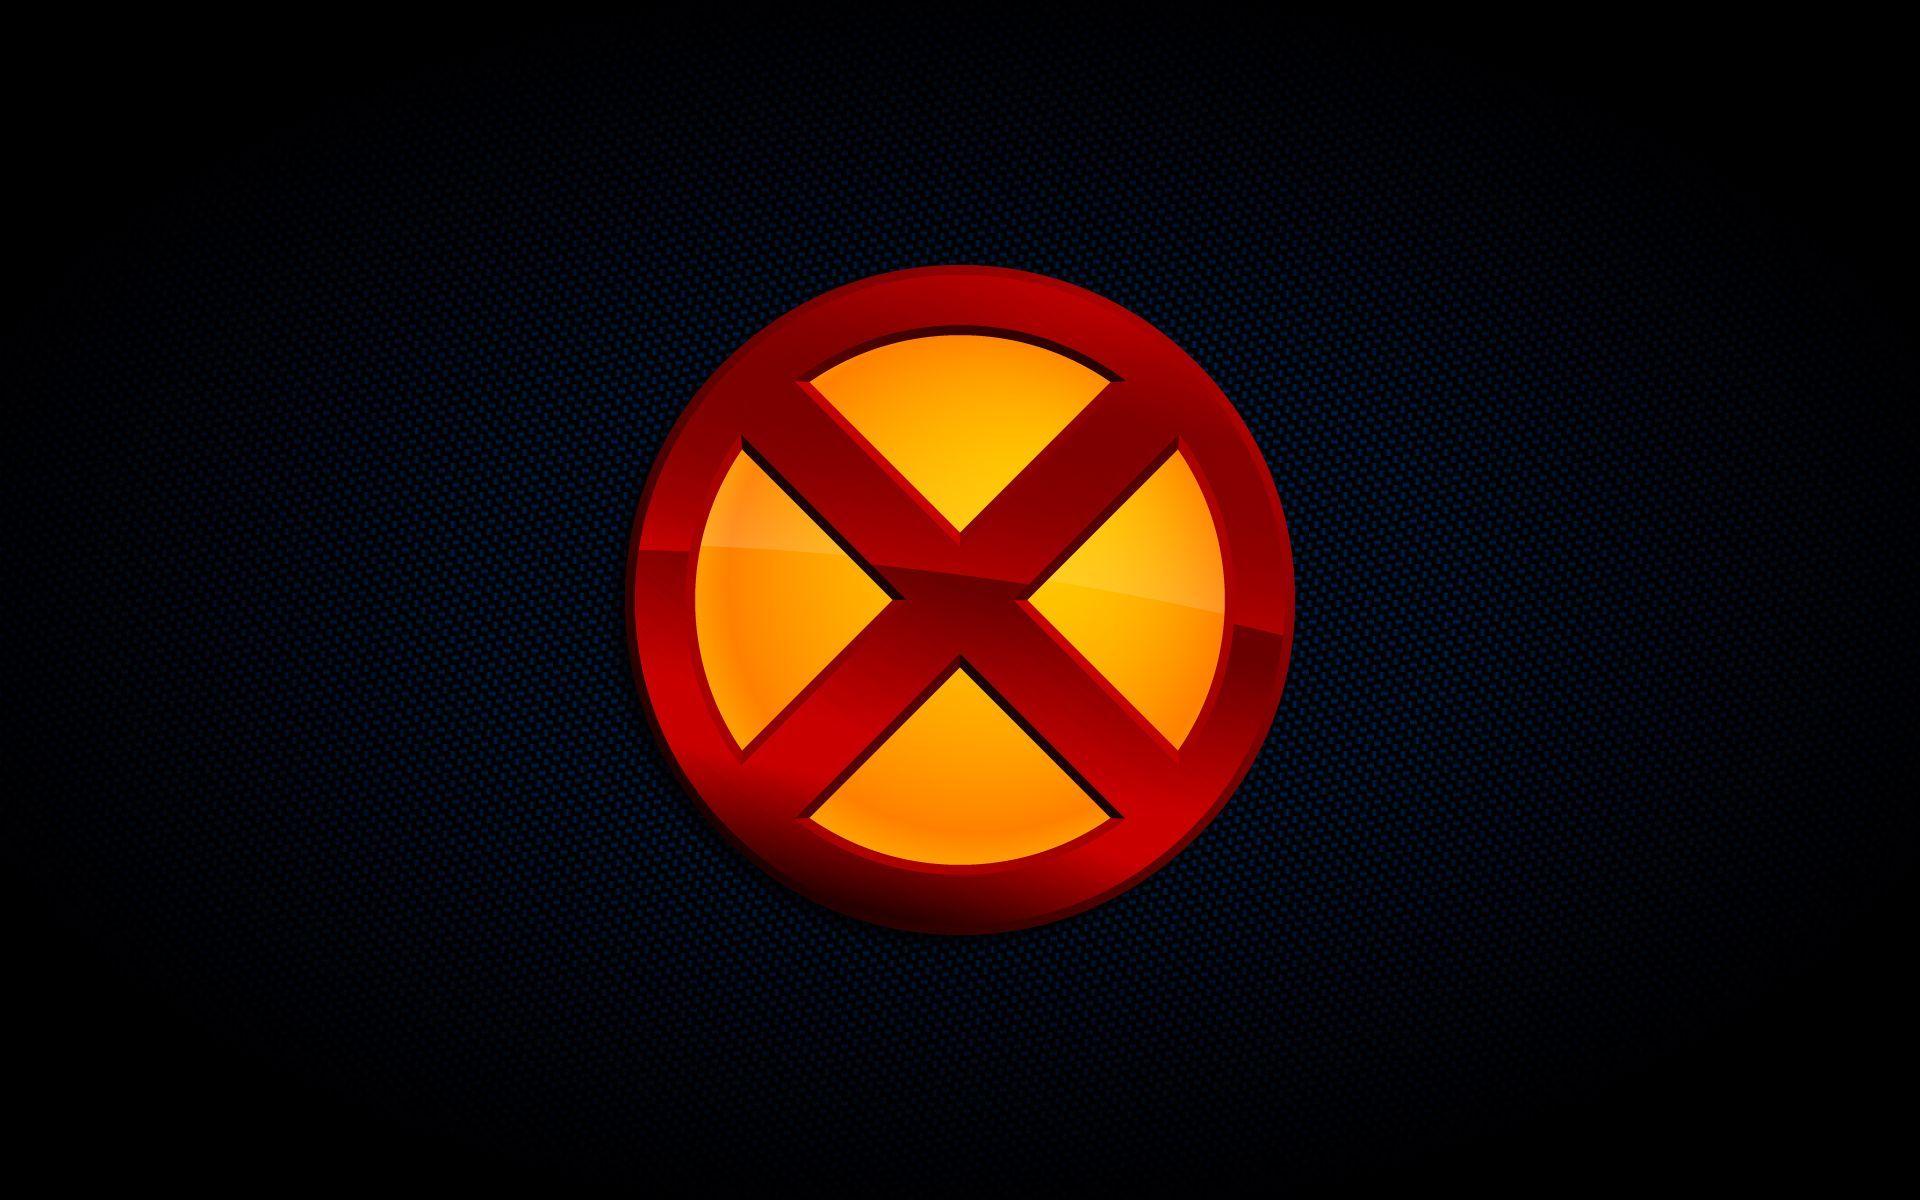 X Men Logo Wallpaper For Mac #JqH. Man wallpaper, Men logo, X men